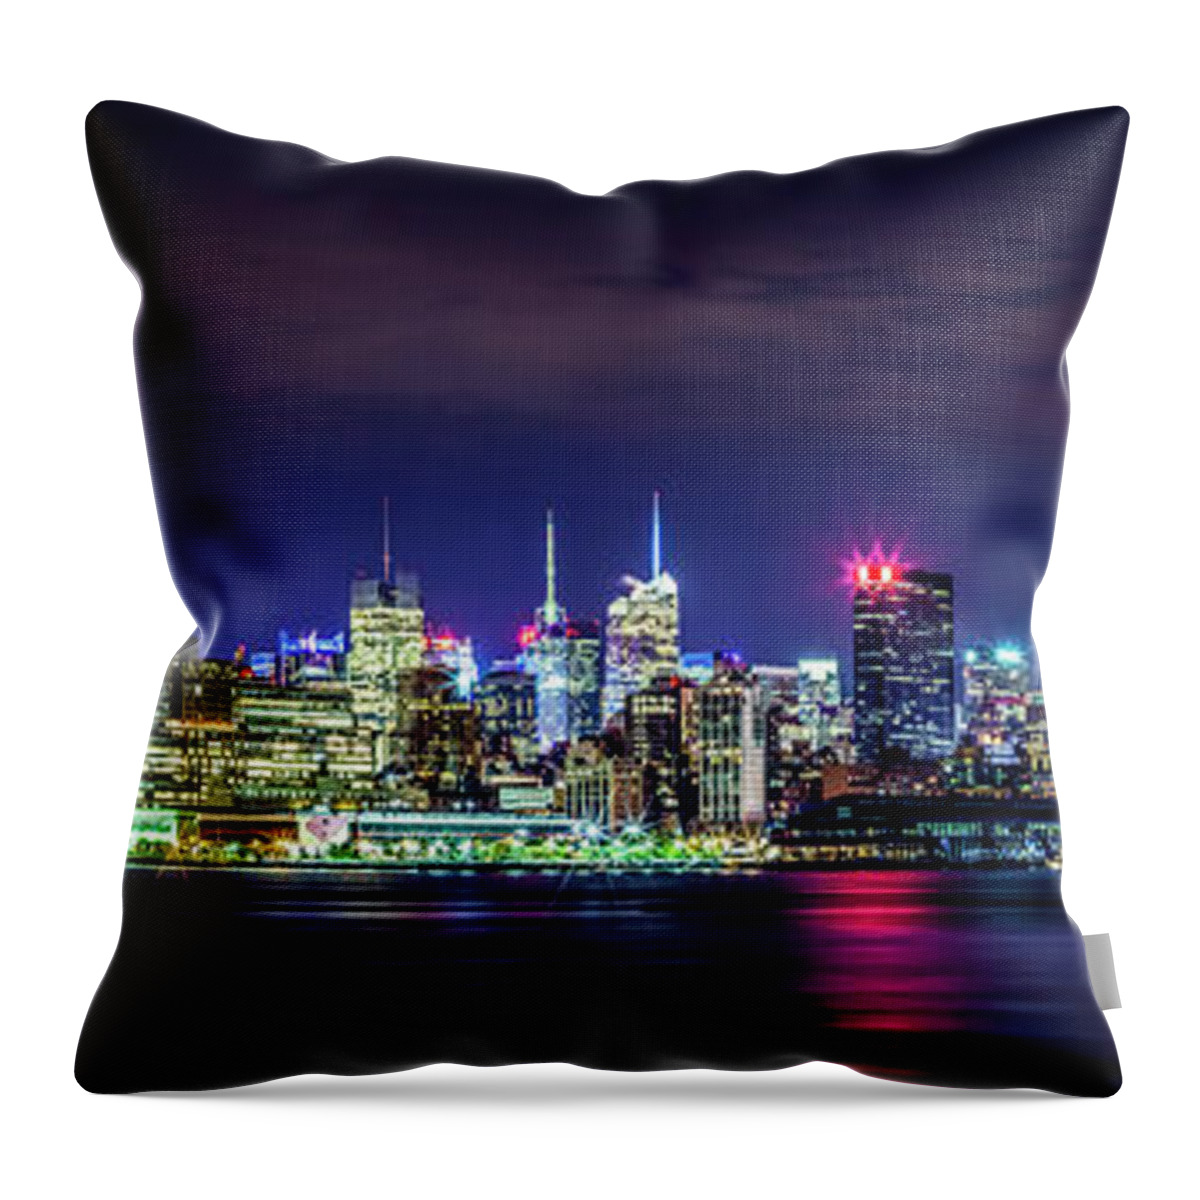 New York City Skyline Throw Pillow featuring the photograph New York City Skyline by Az Jackson